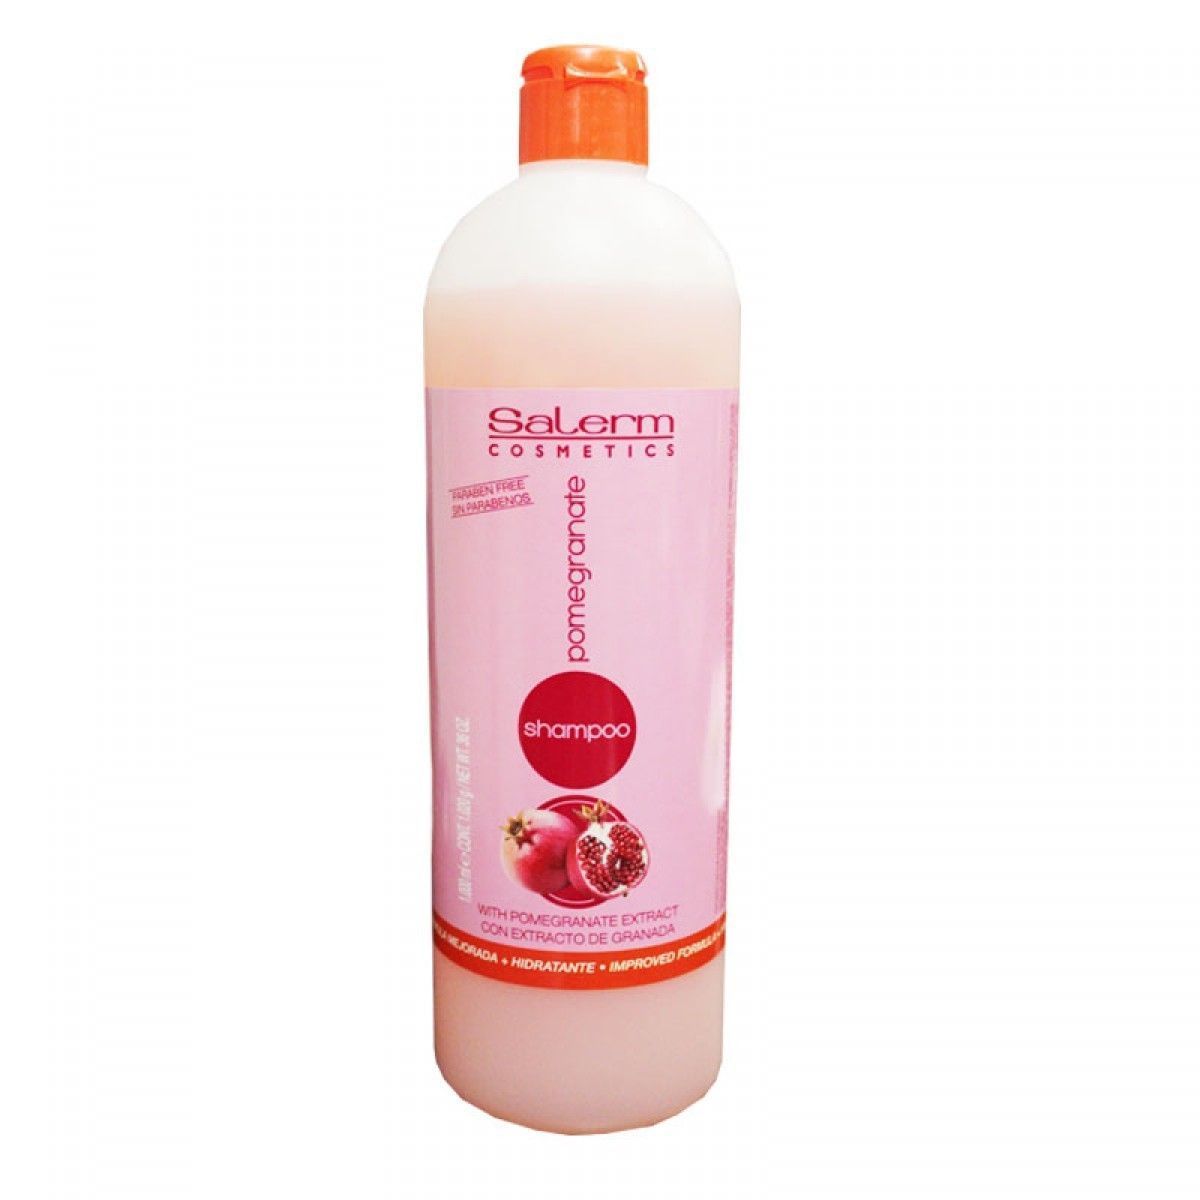 Pomegranate Shampoo - 53 Karat